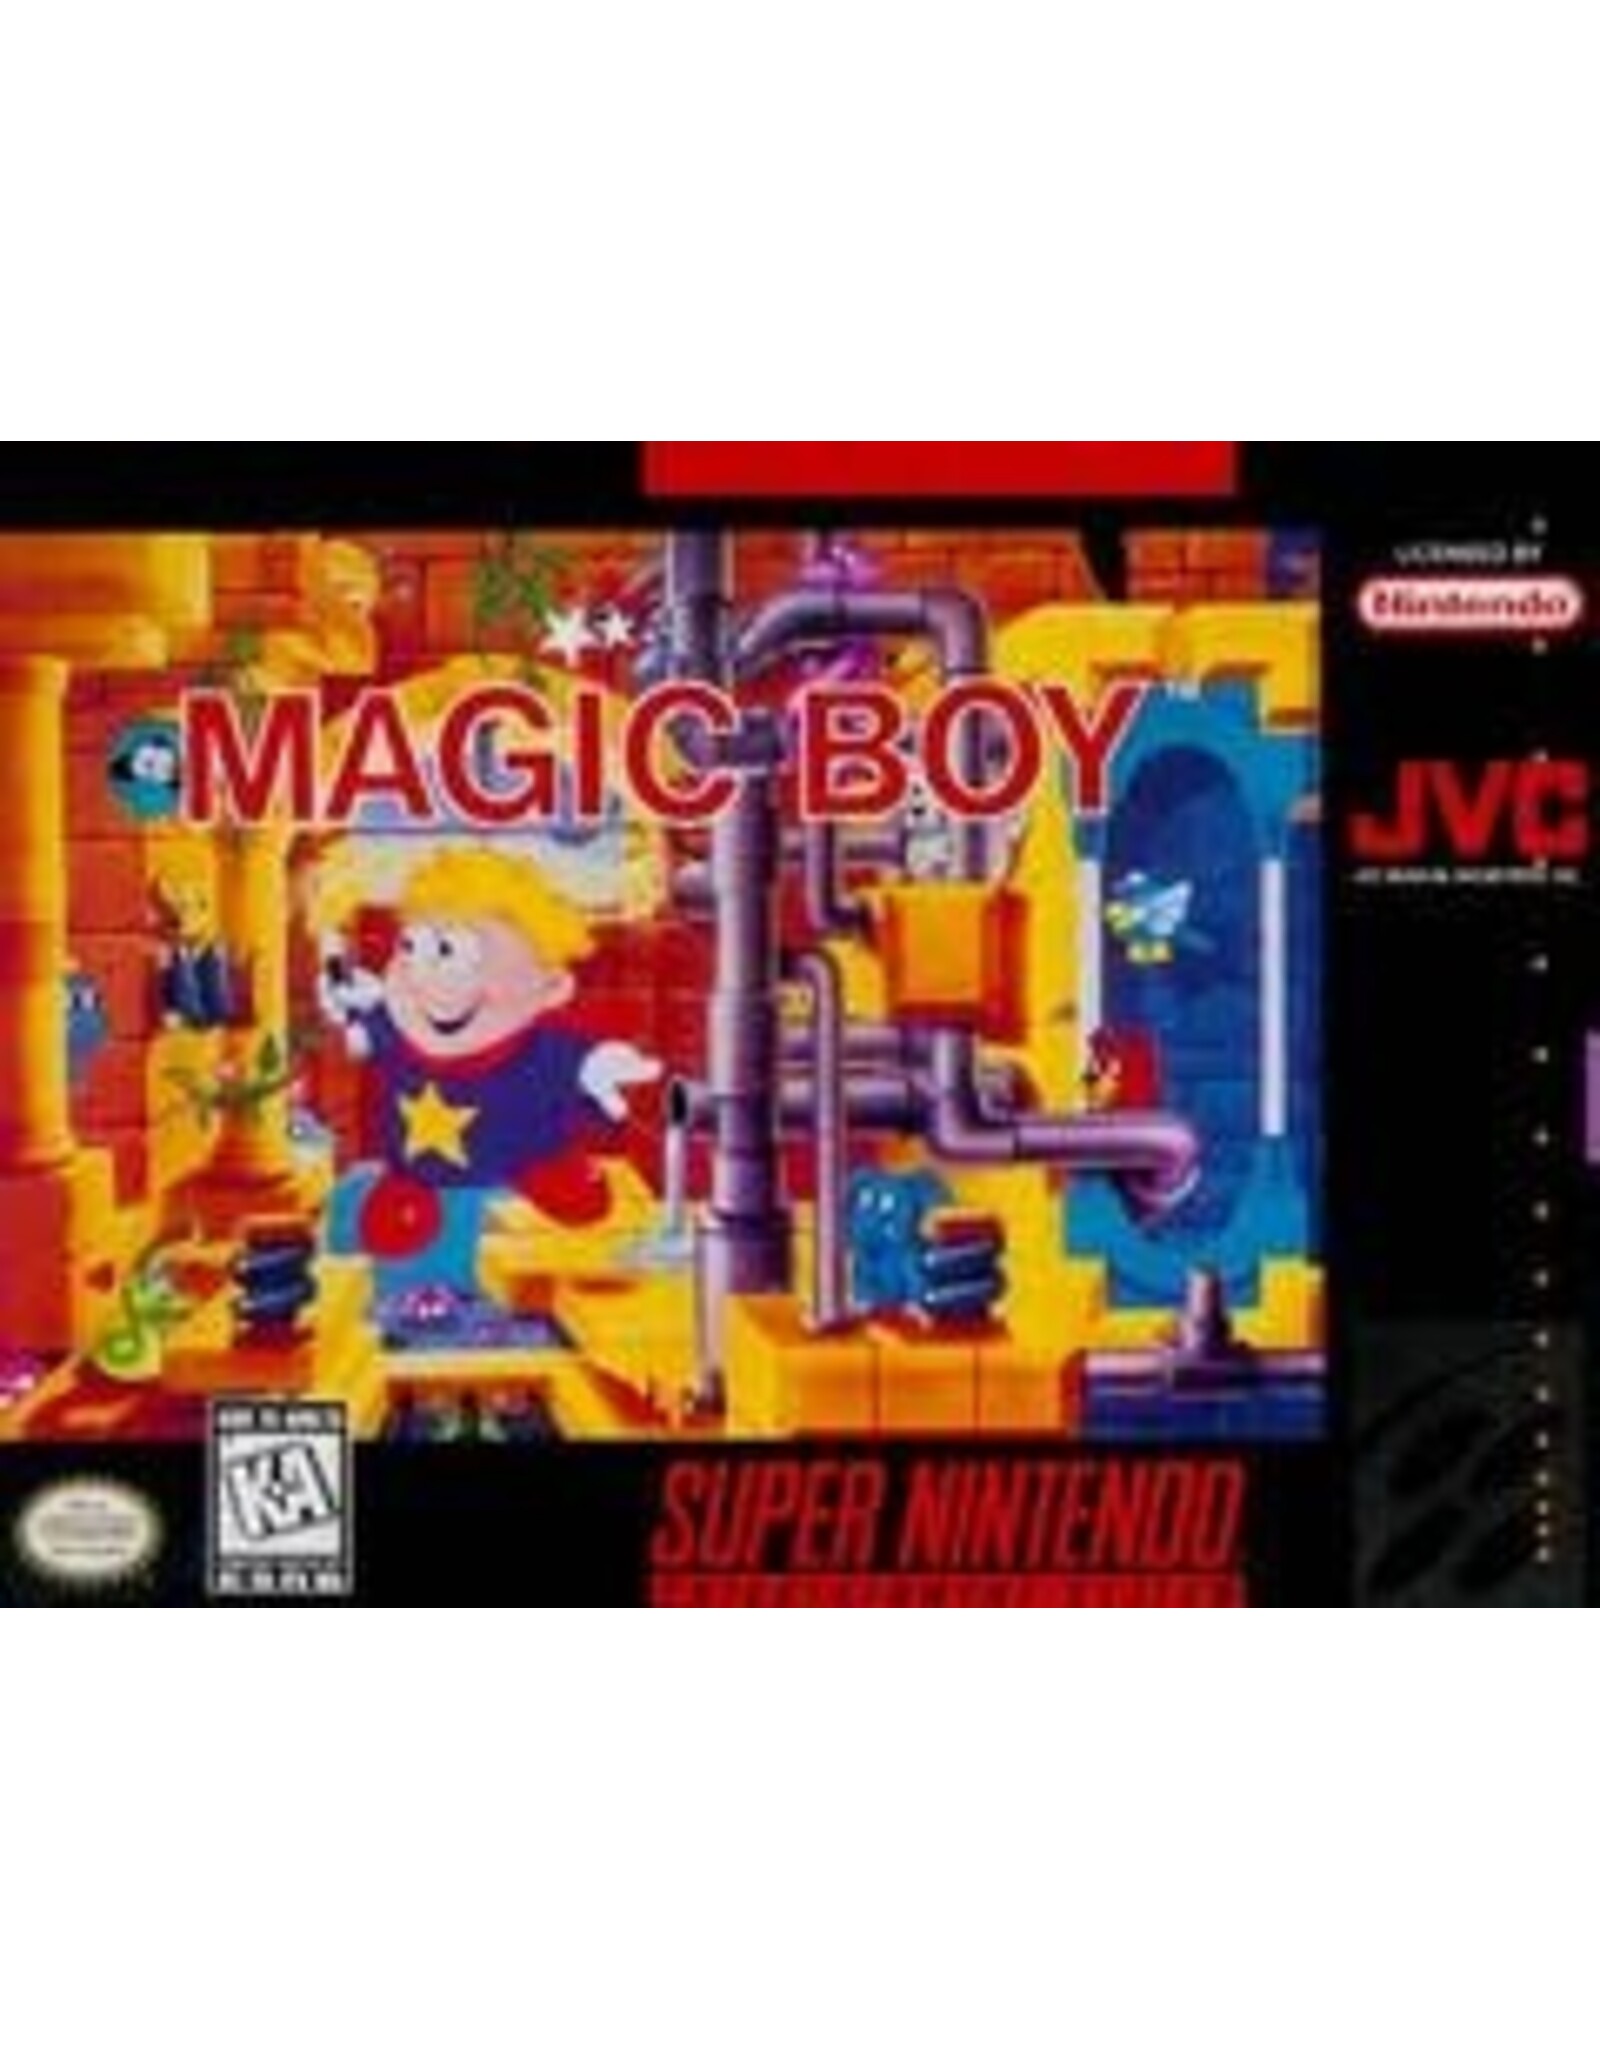 Super Nintendo Magic Boy (Damaged Box and Cart Label, No Manual, Includes Poster!)